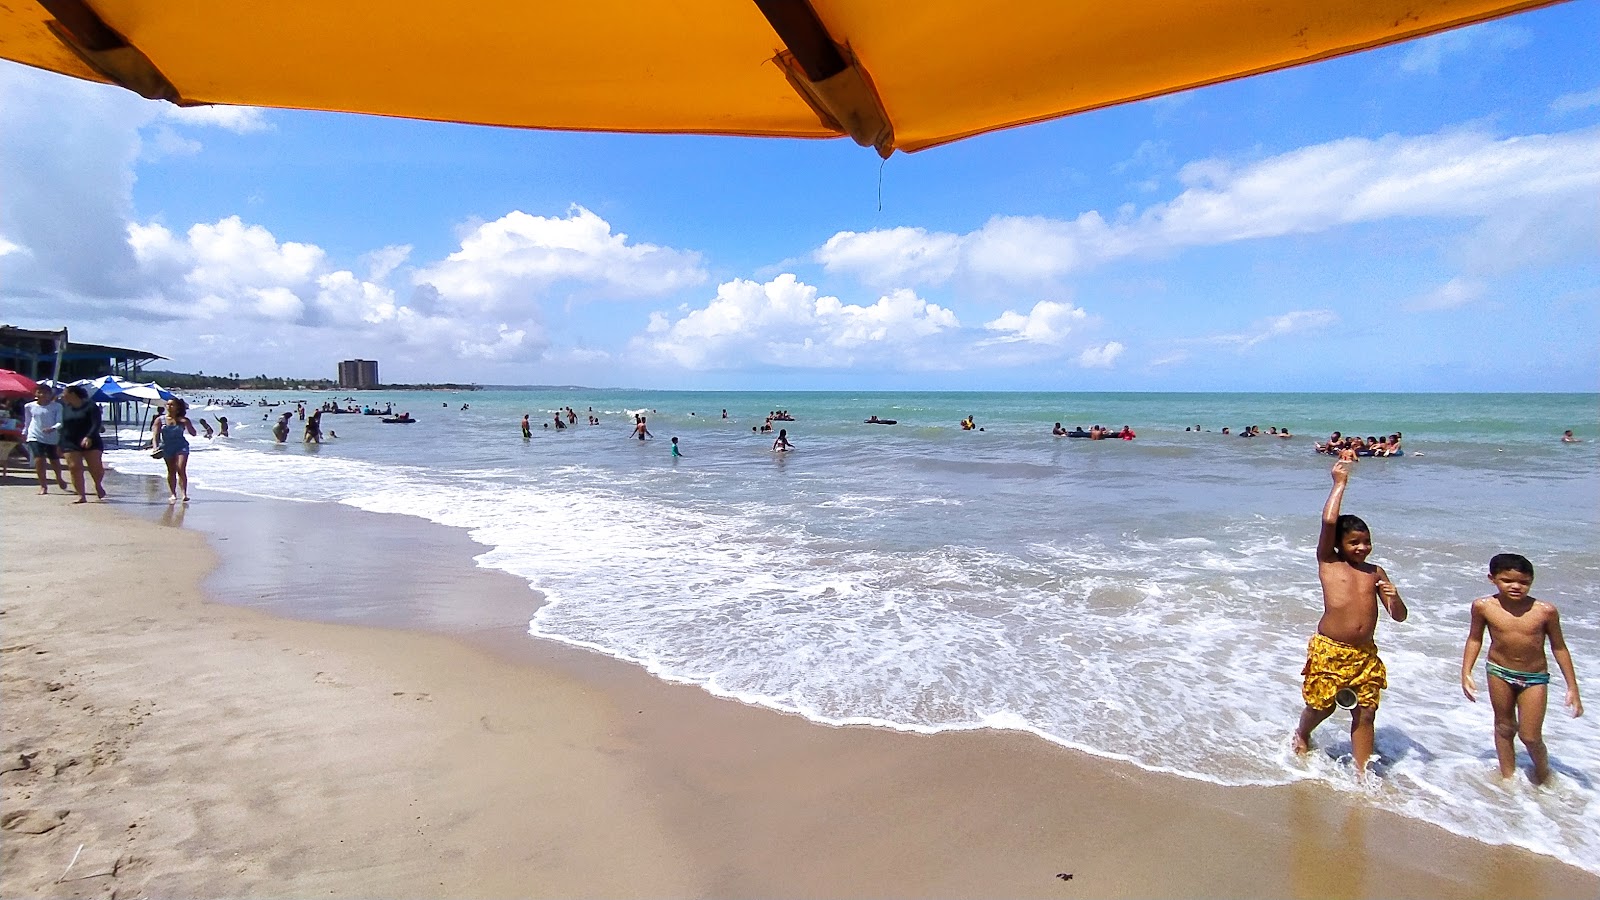 Praia da Conceicao'in fotoğrafı turkuaz saf su yüzey ile